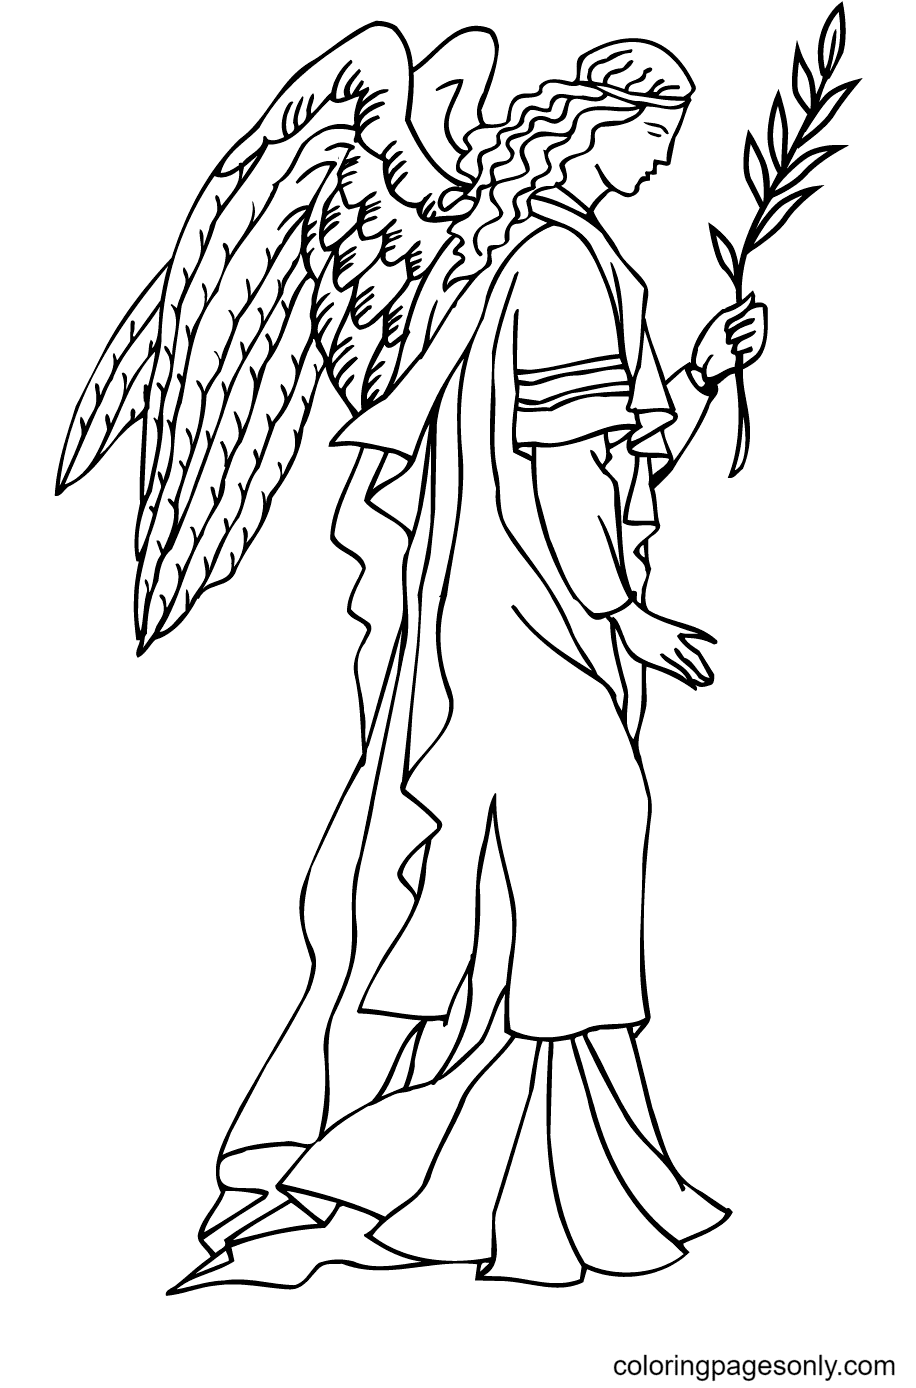 Раскраска ангела хранителя